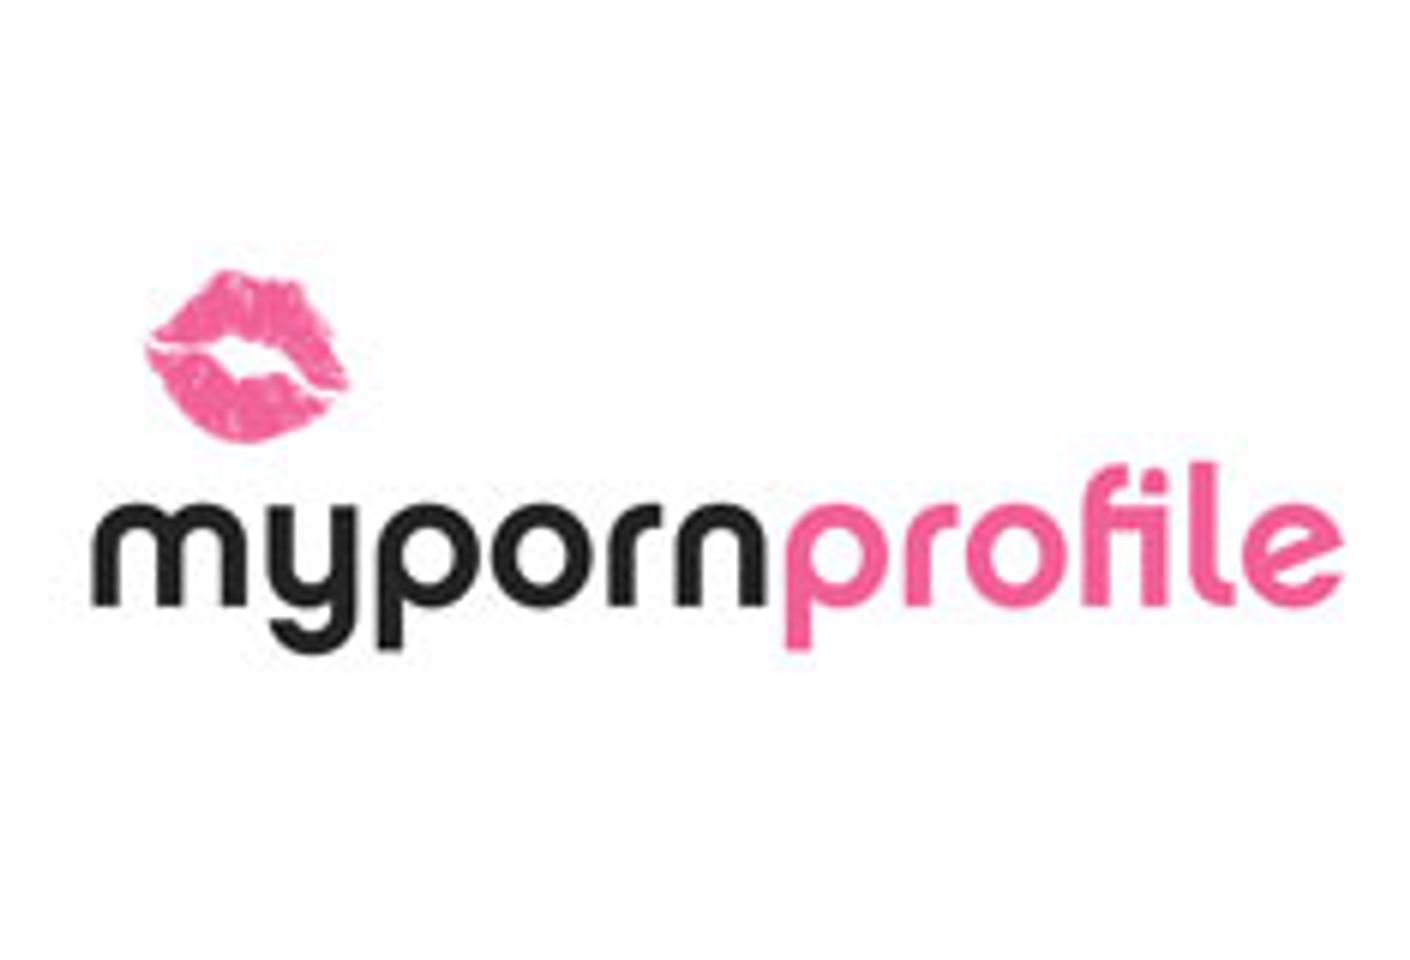 MyPornProfile.com Brings Back Pay-to-Tweet Video Program